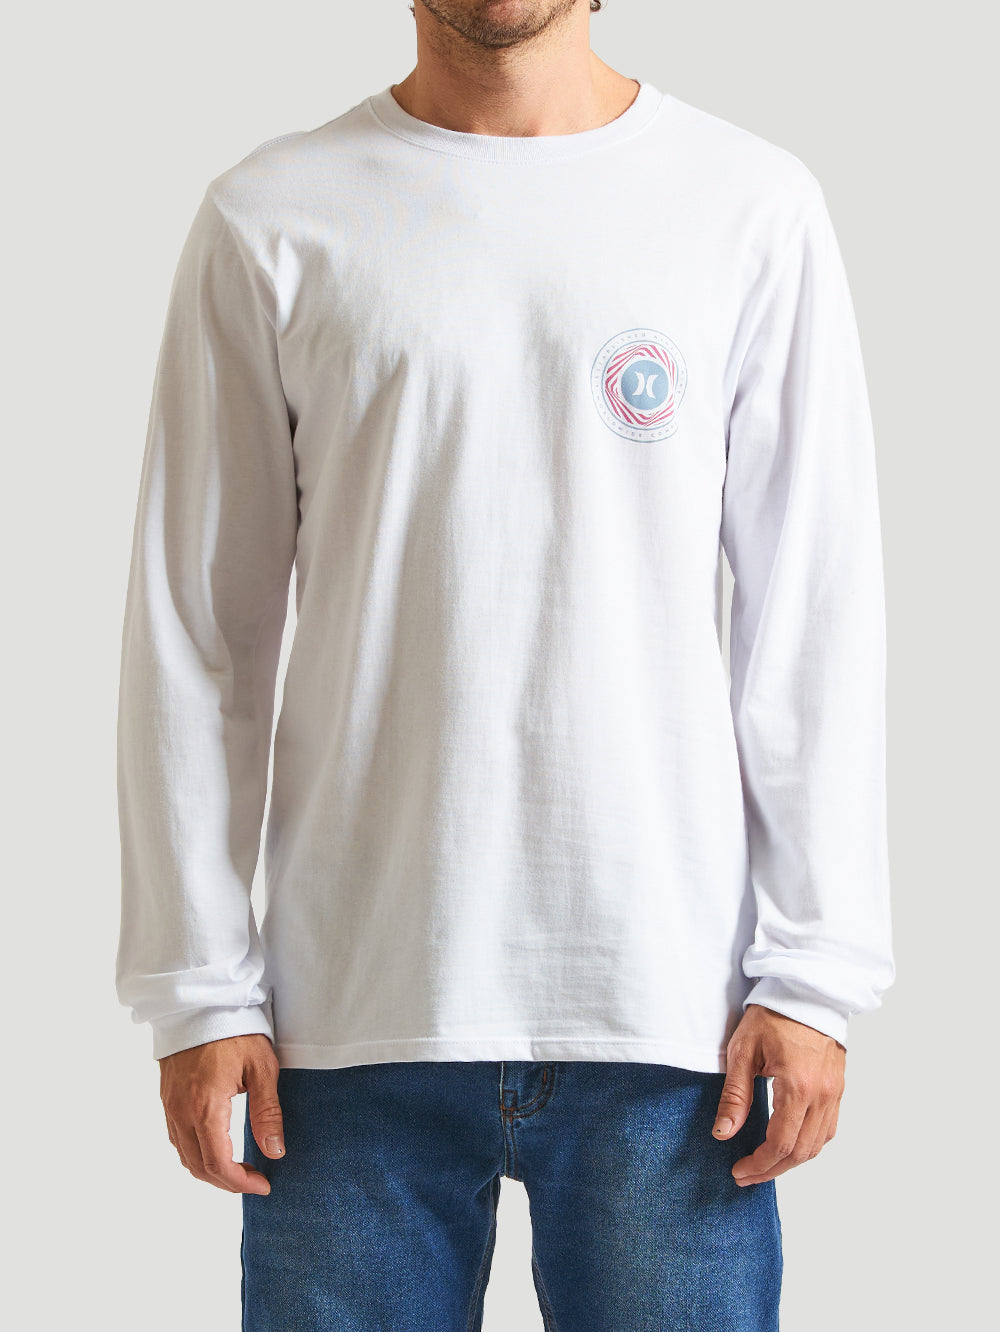 Camiseta Manga Longa Hurley Spiral Branco